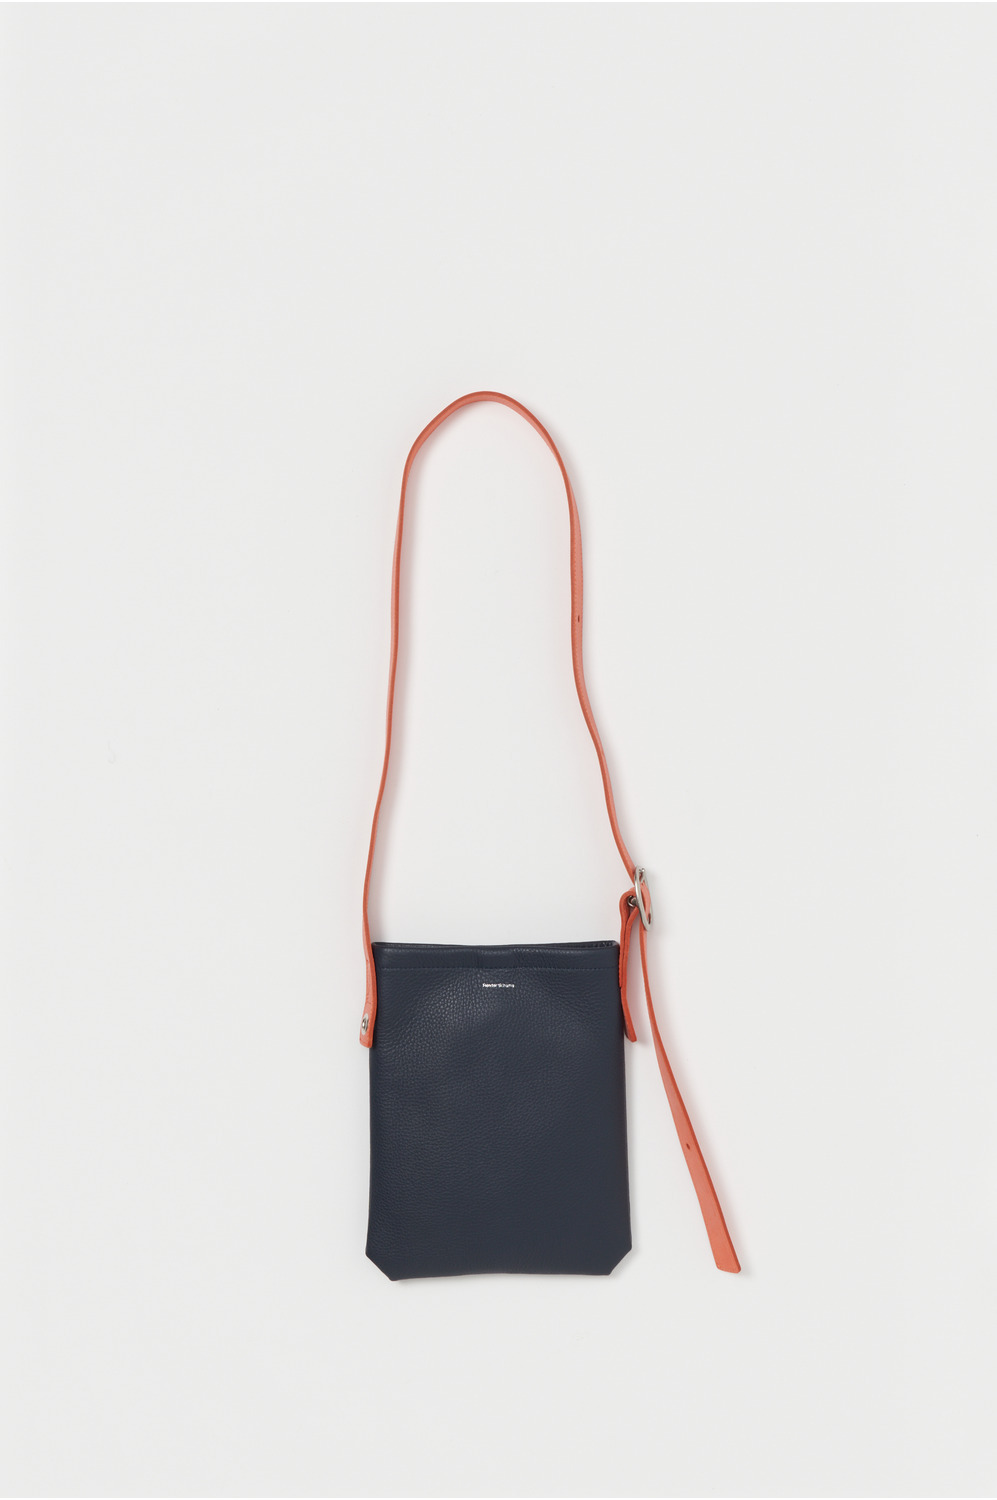 one side belt bag small 詳細画像 navy 1